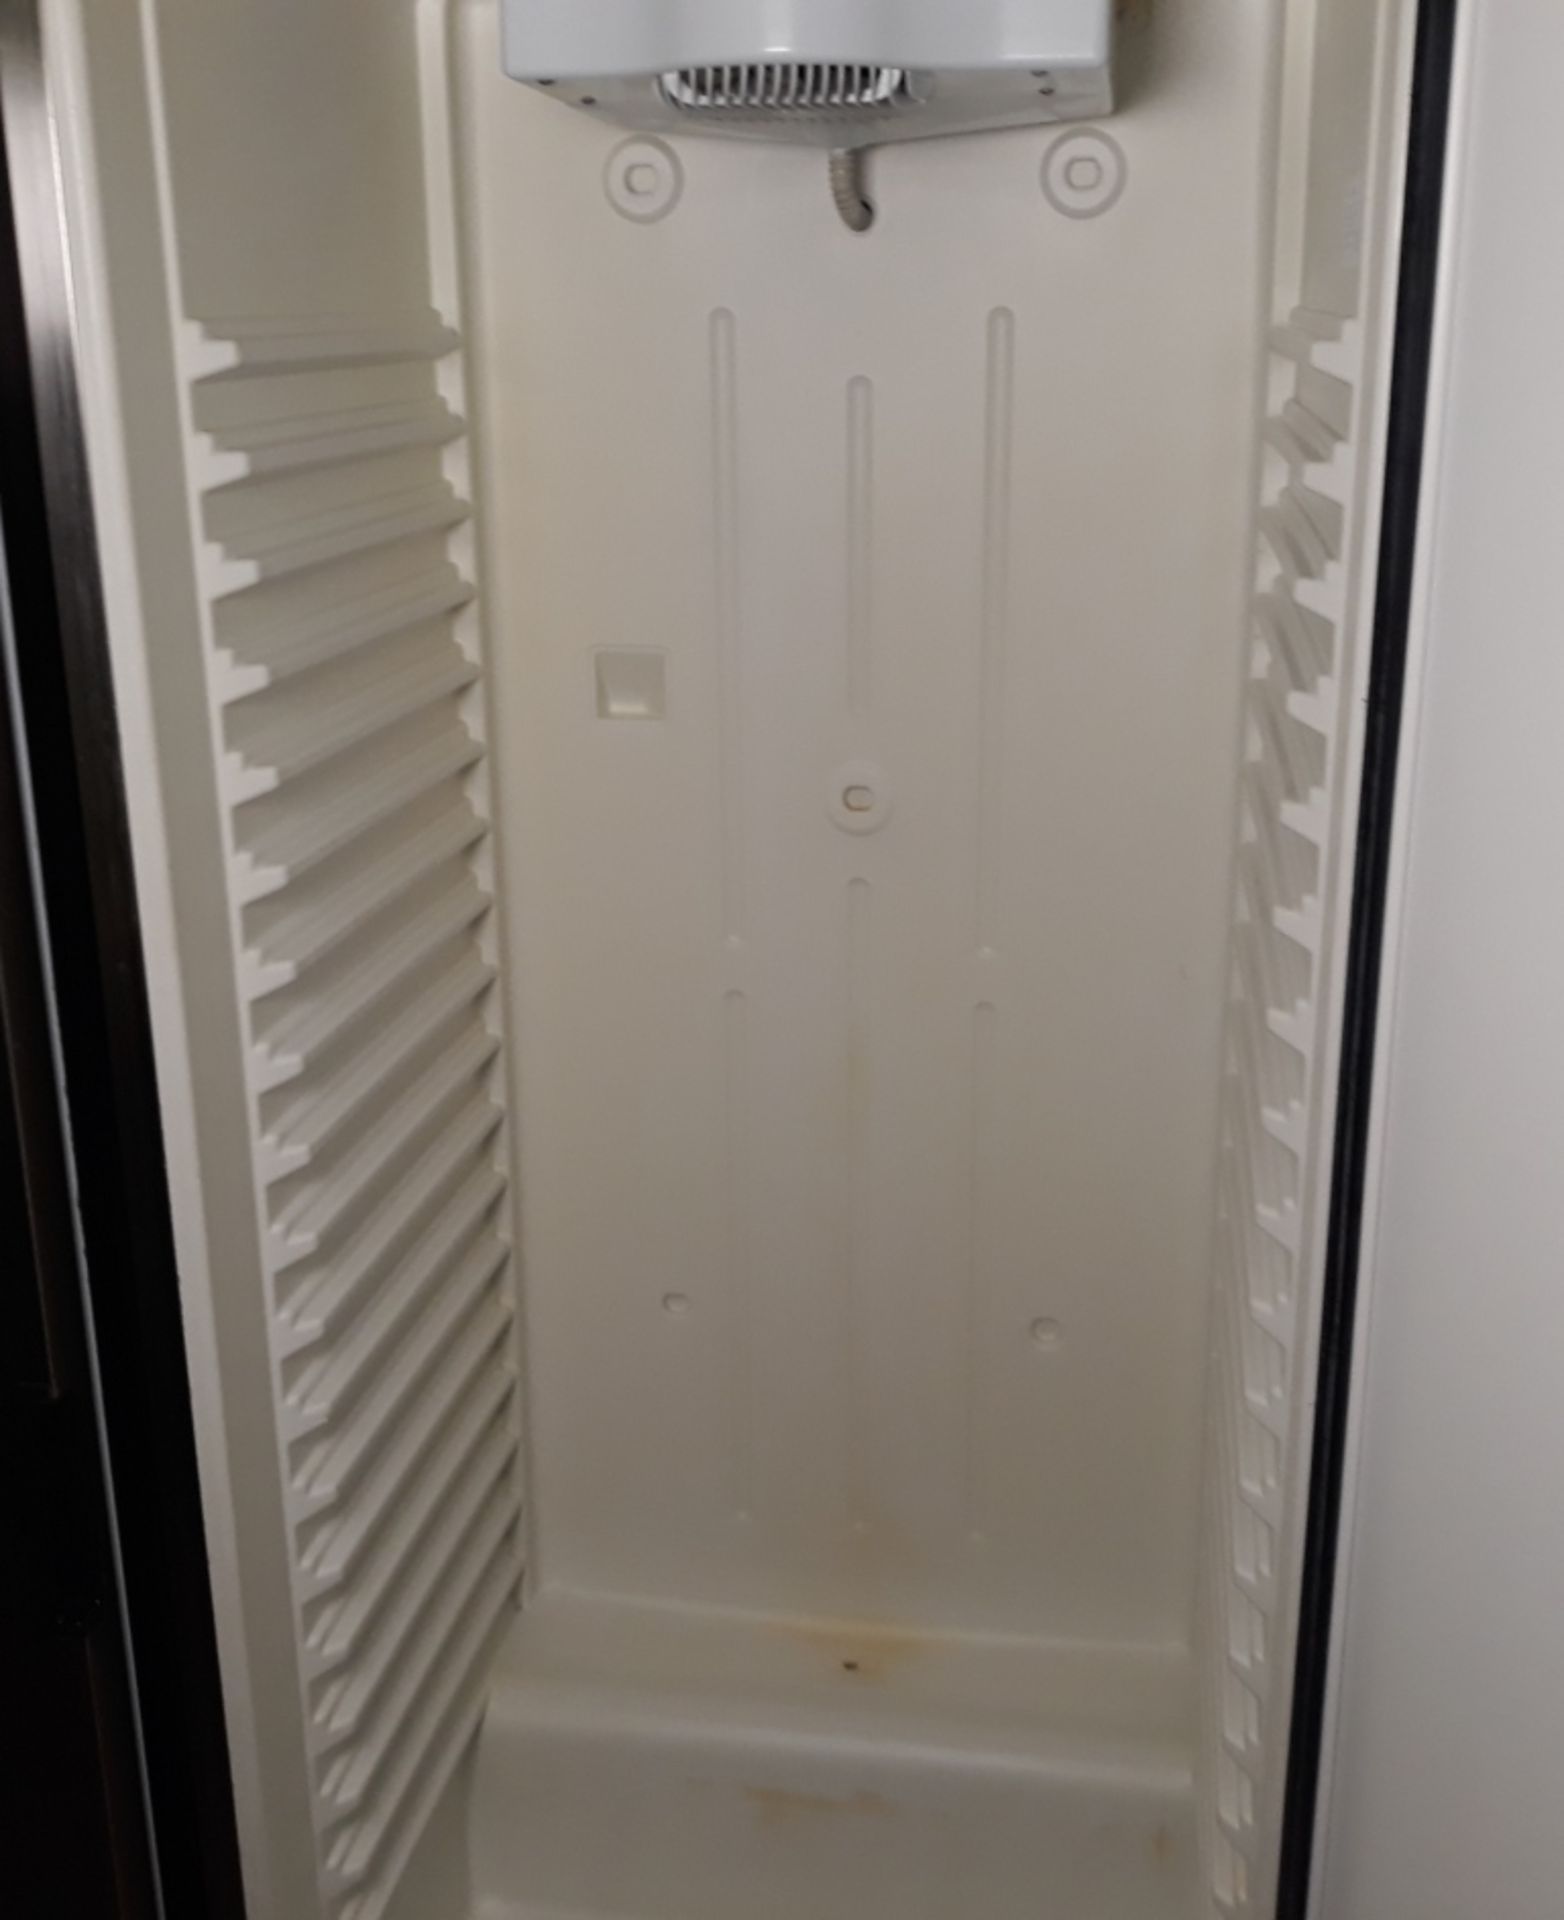 Mondial Elite ECA197643 single door fridge. - Image 3 of 5